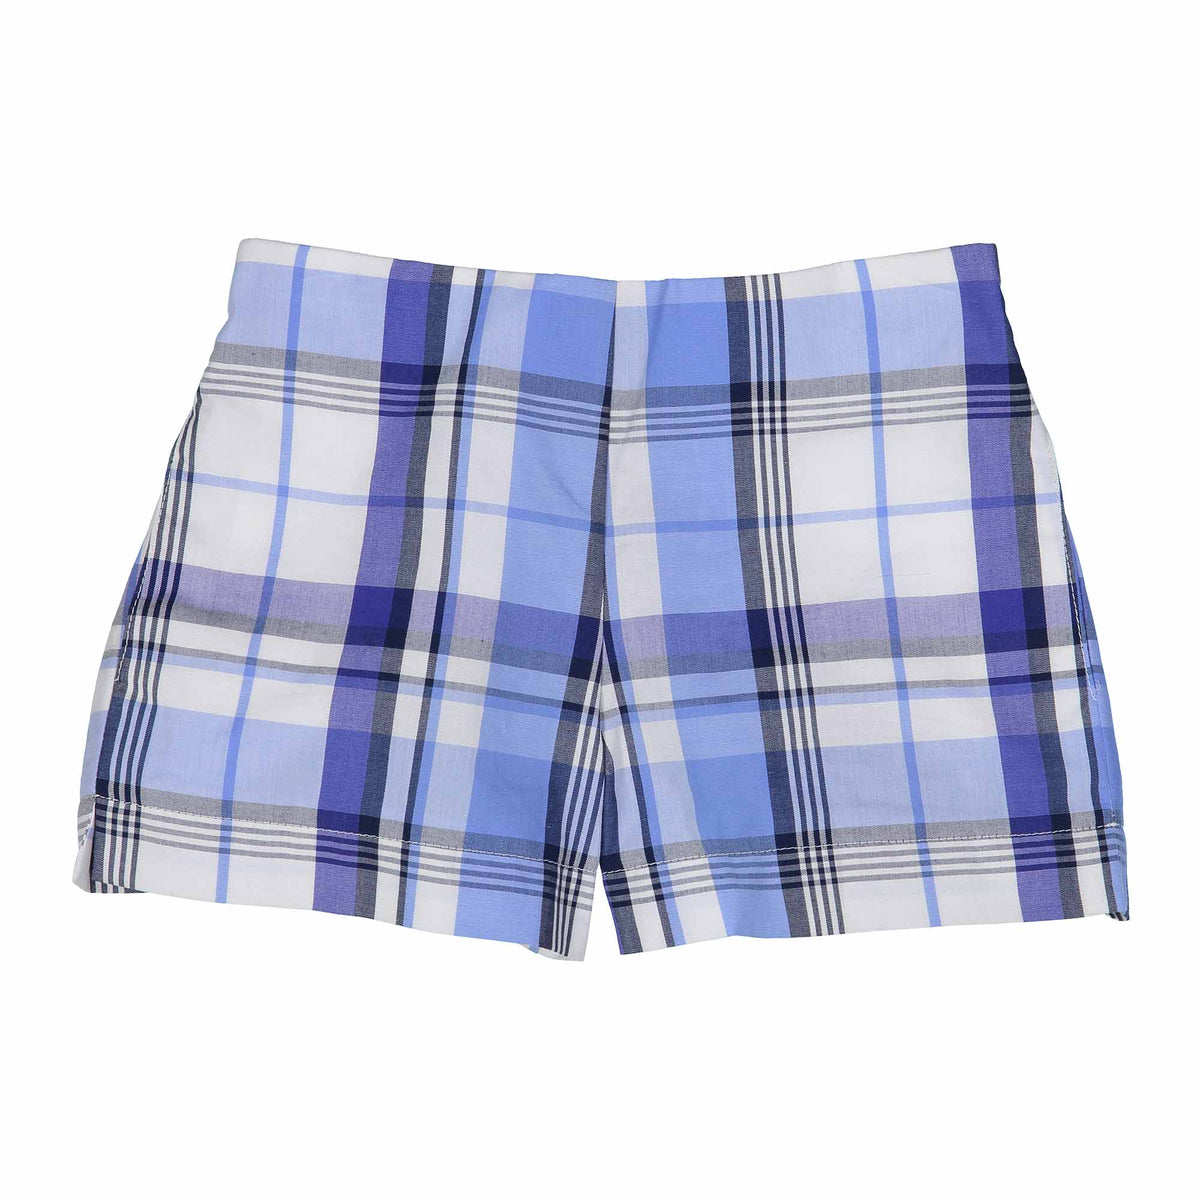 Classic and Preppy Harper Short, Blue Plaid - FINAL SALE-Shorts-CPC - Classic Prep Childrenswear